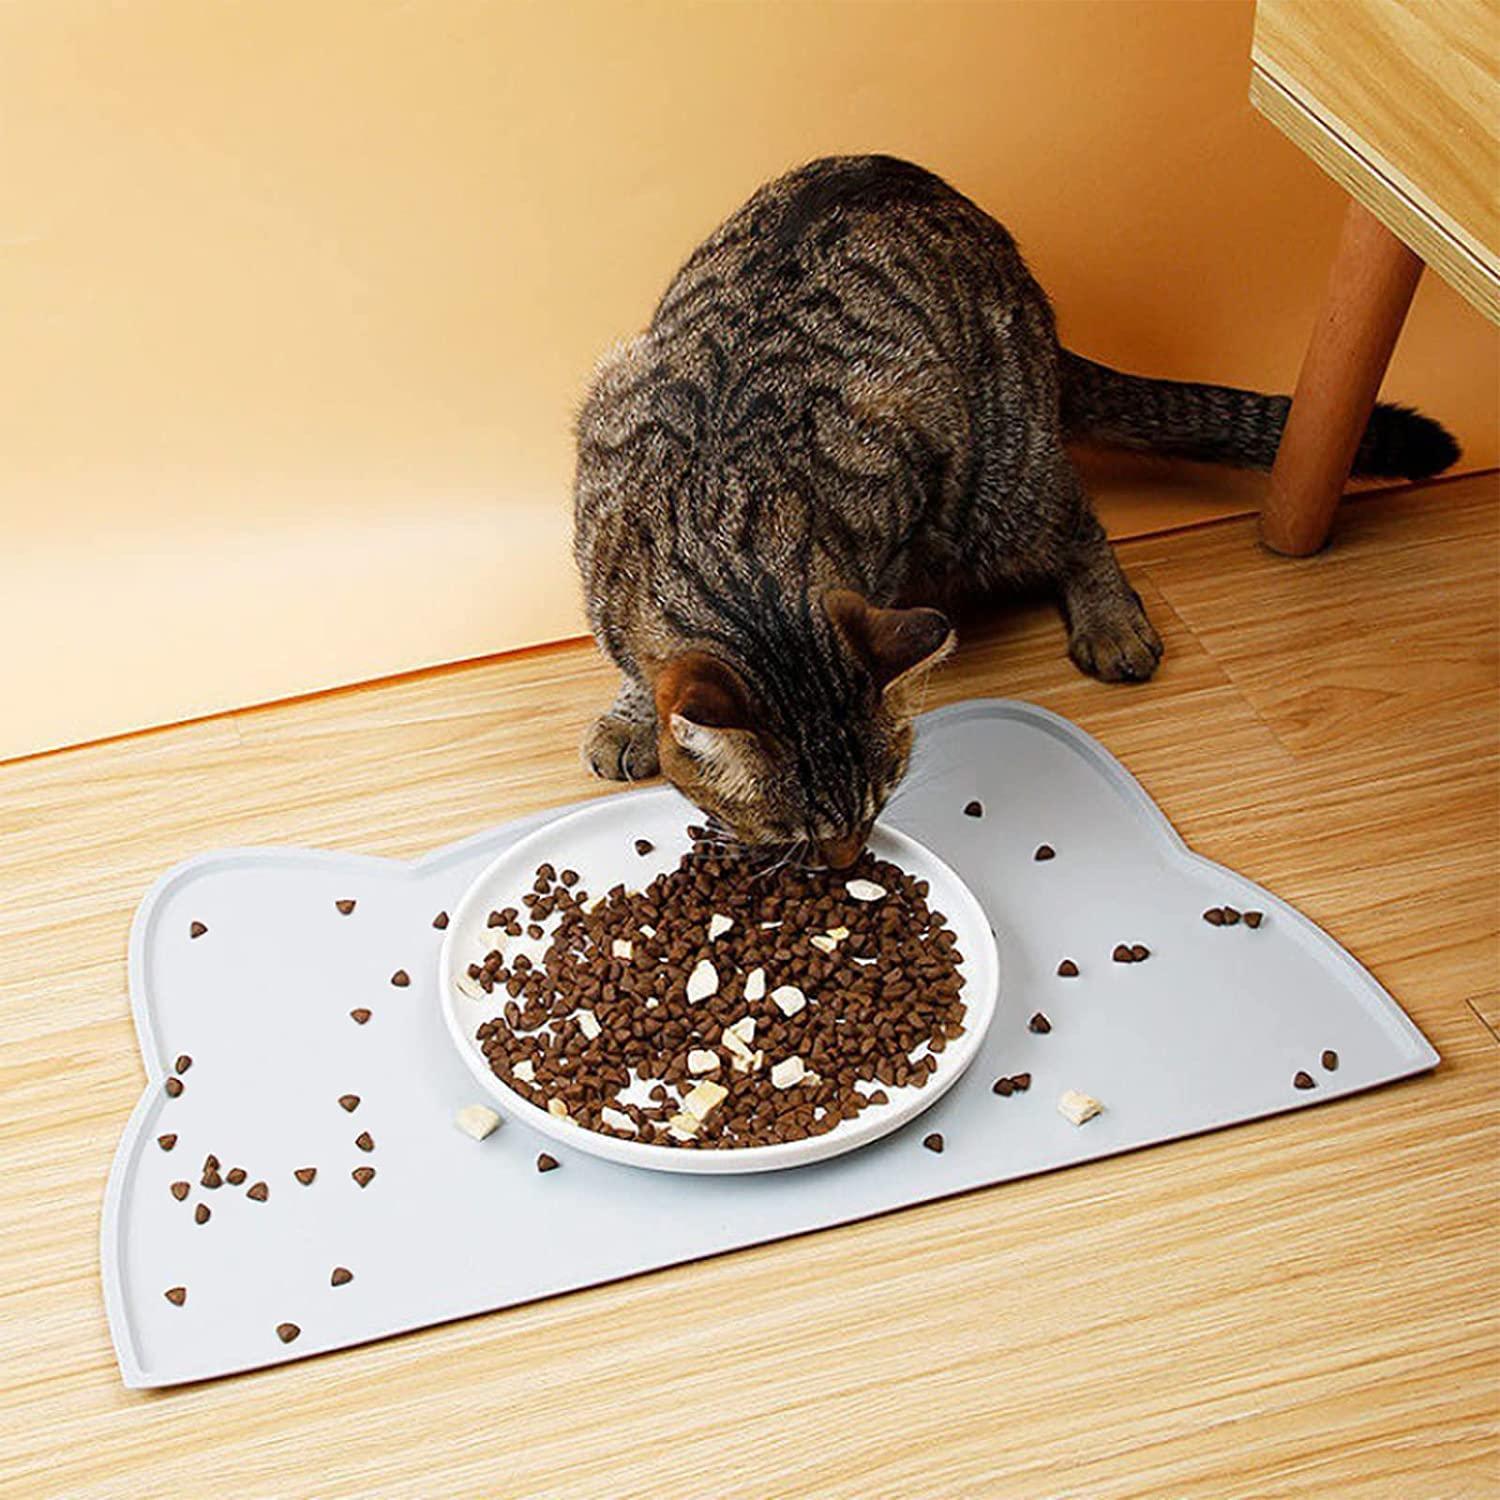 TOKAYIFE Cat Food Mat, Silicone Pet Feeding Mat for Floor Non-Slip  Waterproof Dog Water Bowl Tray Cushion (17 x 10, Coral Pink)